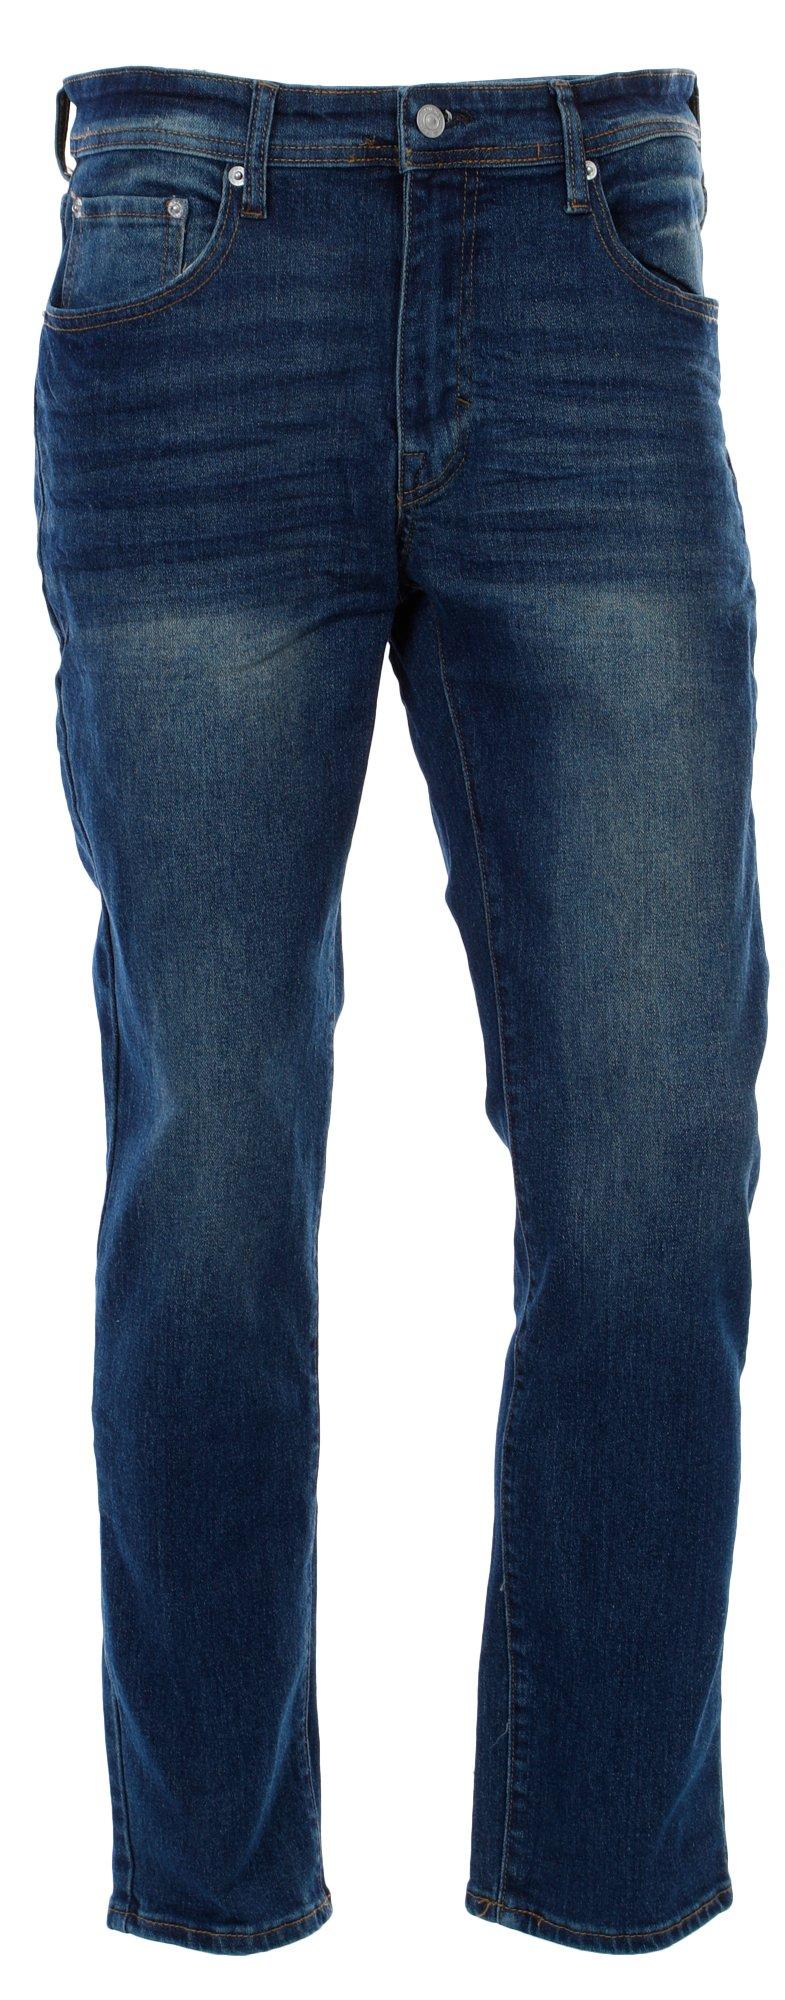 Men's Modern Slim Fit Jeans